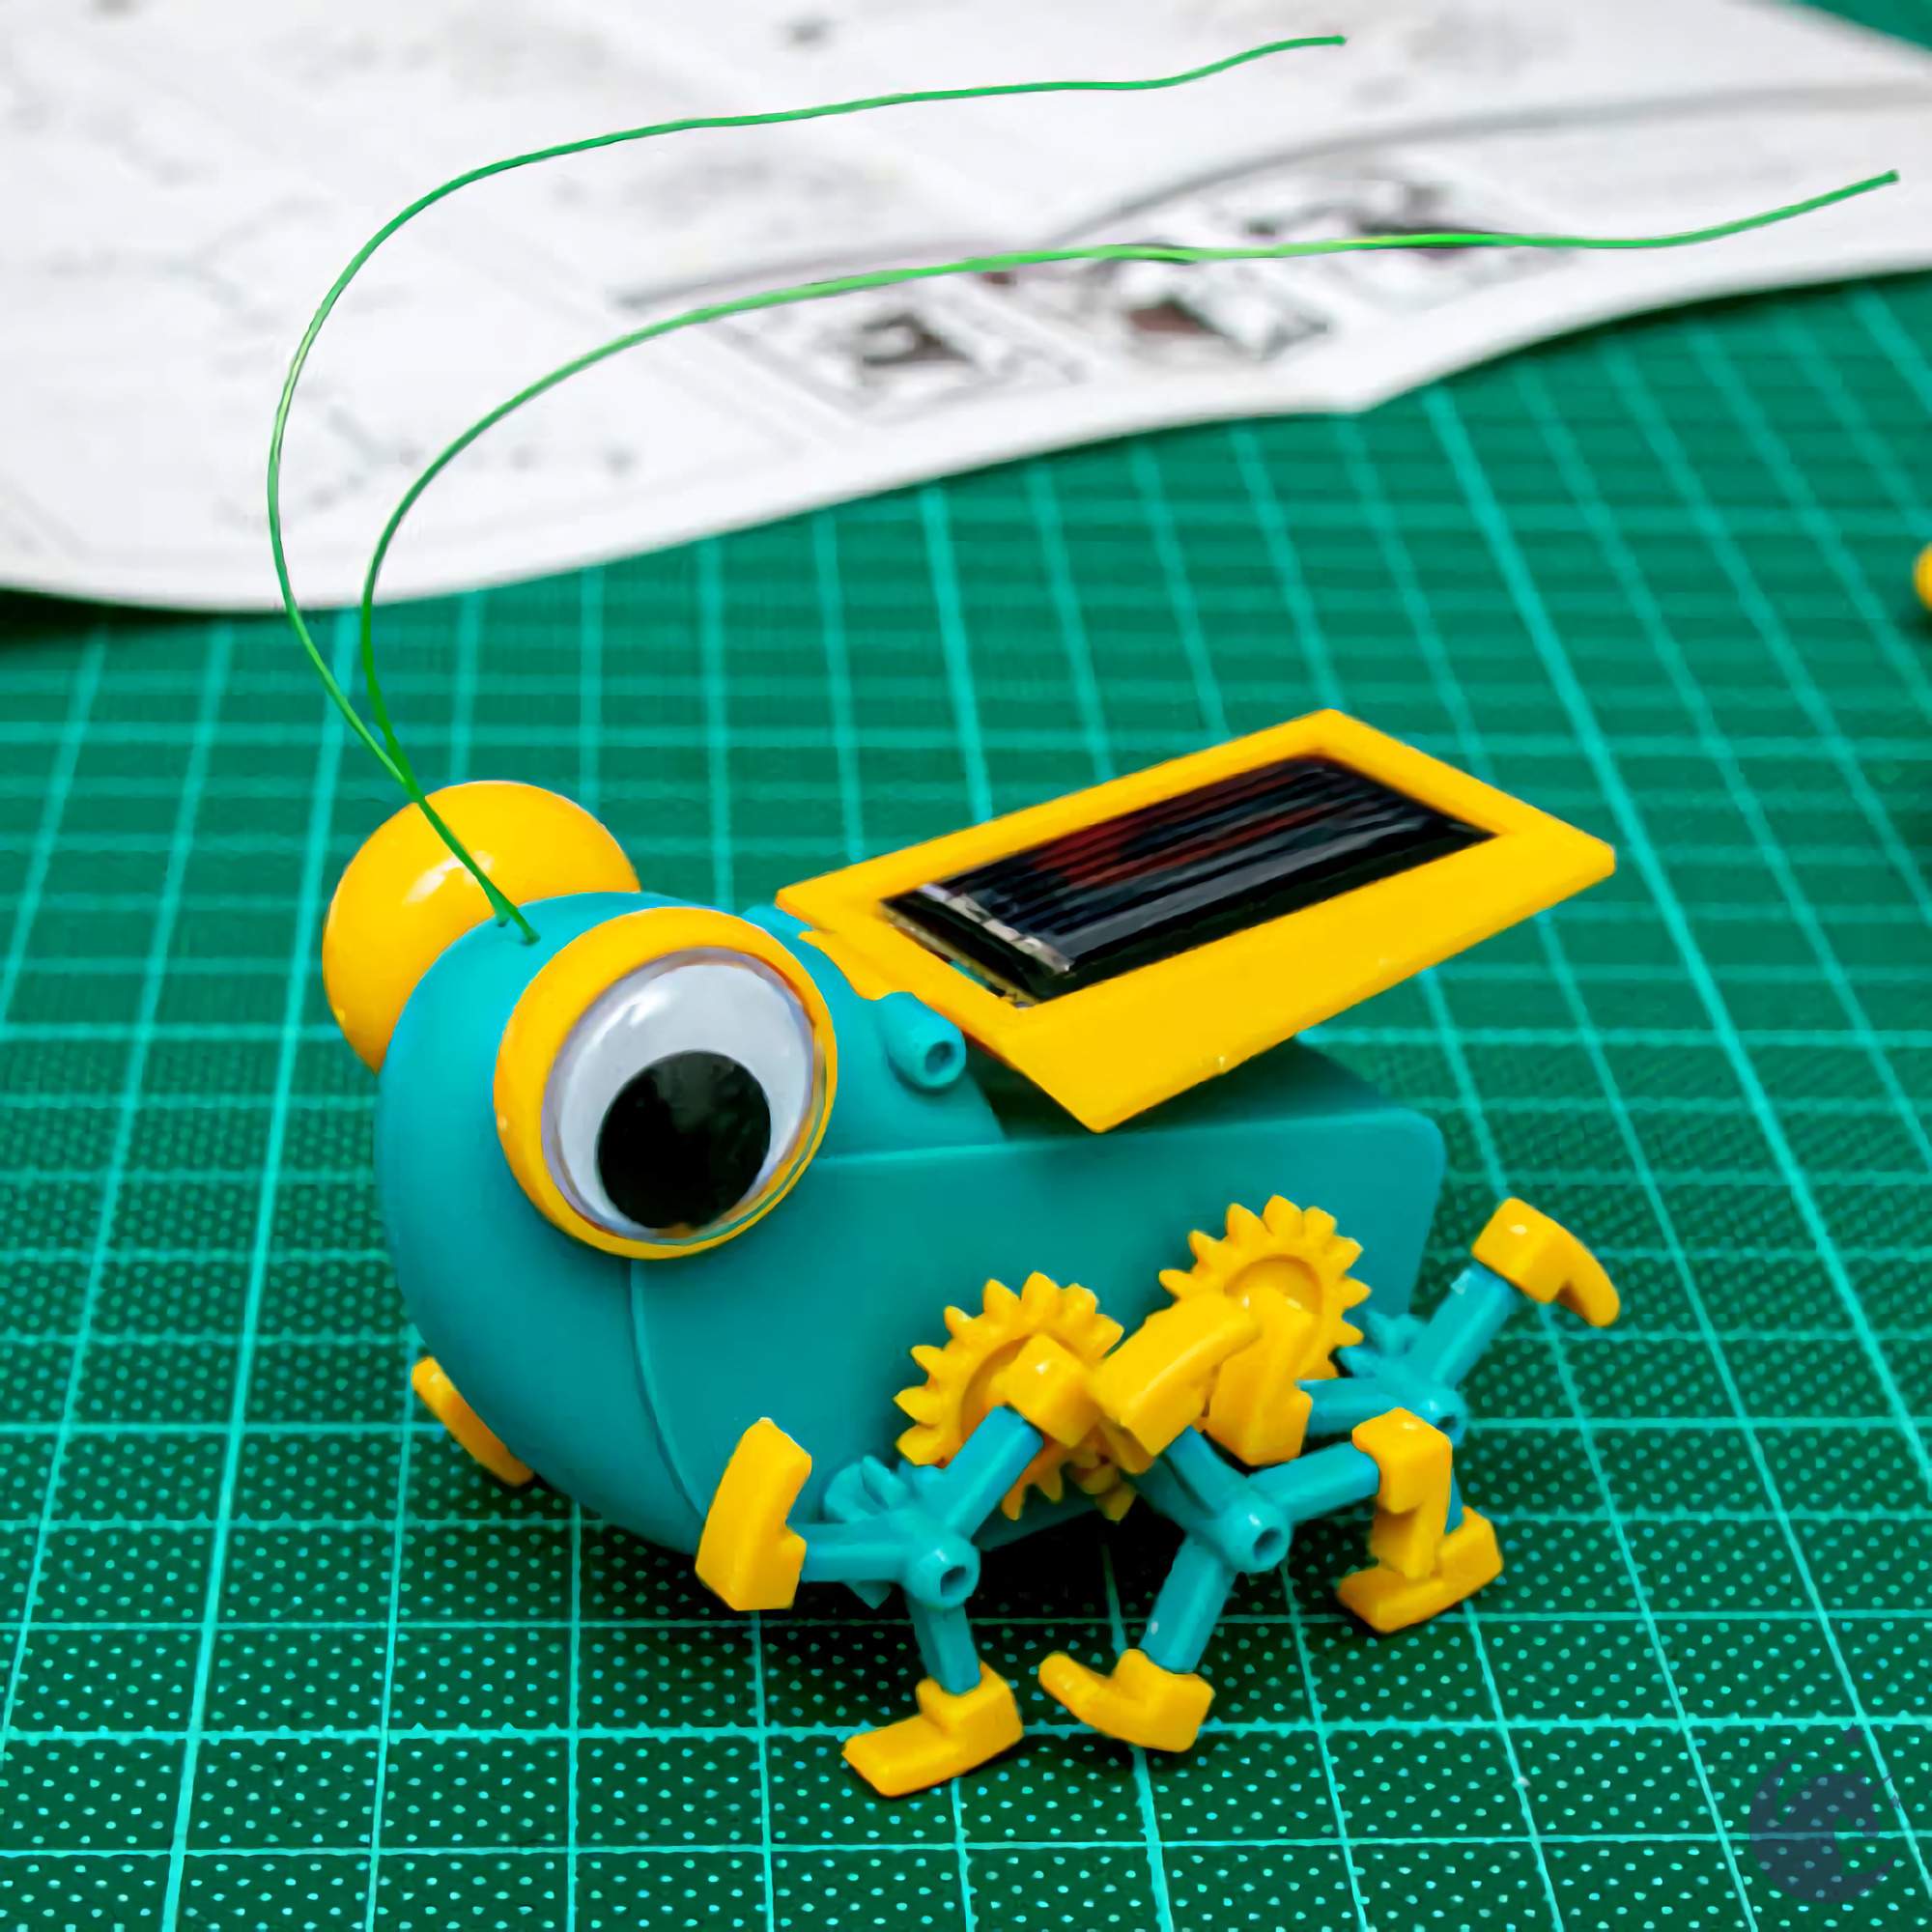 unicorntoys cic kits solar bug educational robot kit engineering stem toys for kids CIC21-683